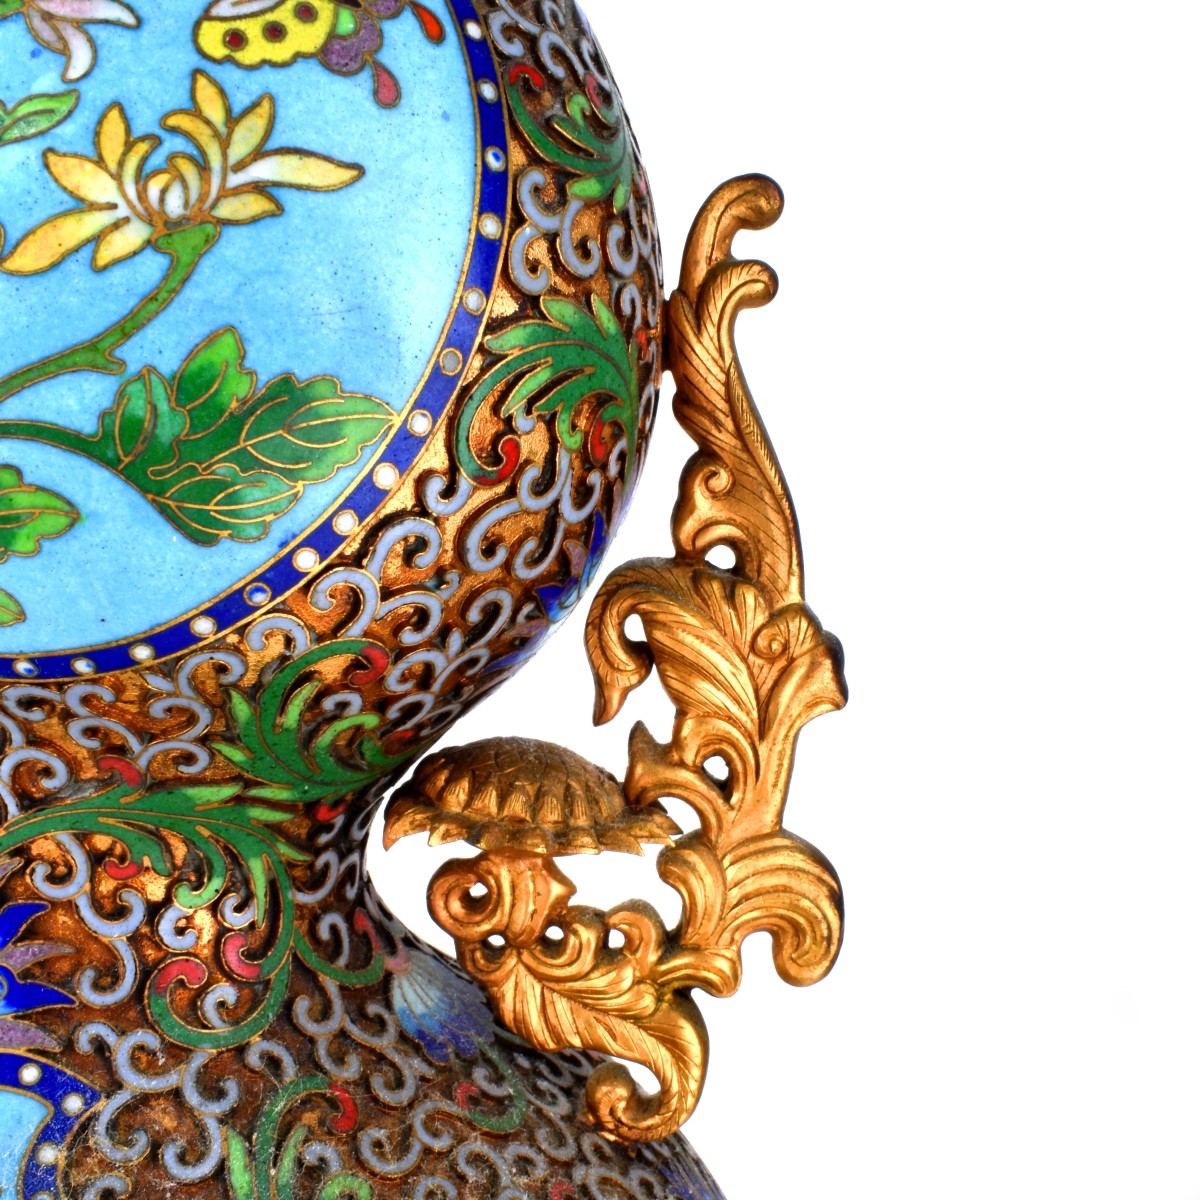 Pair of Chinese Republic Era Double Gourd Vases